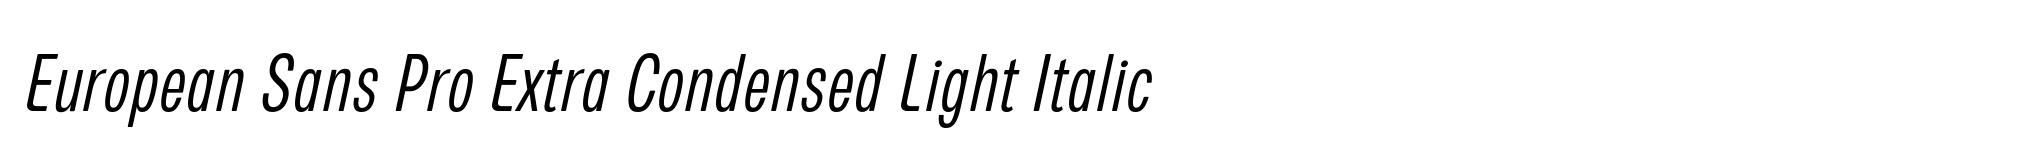 European Sans Pro Extra Condensed Light Italic image